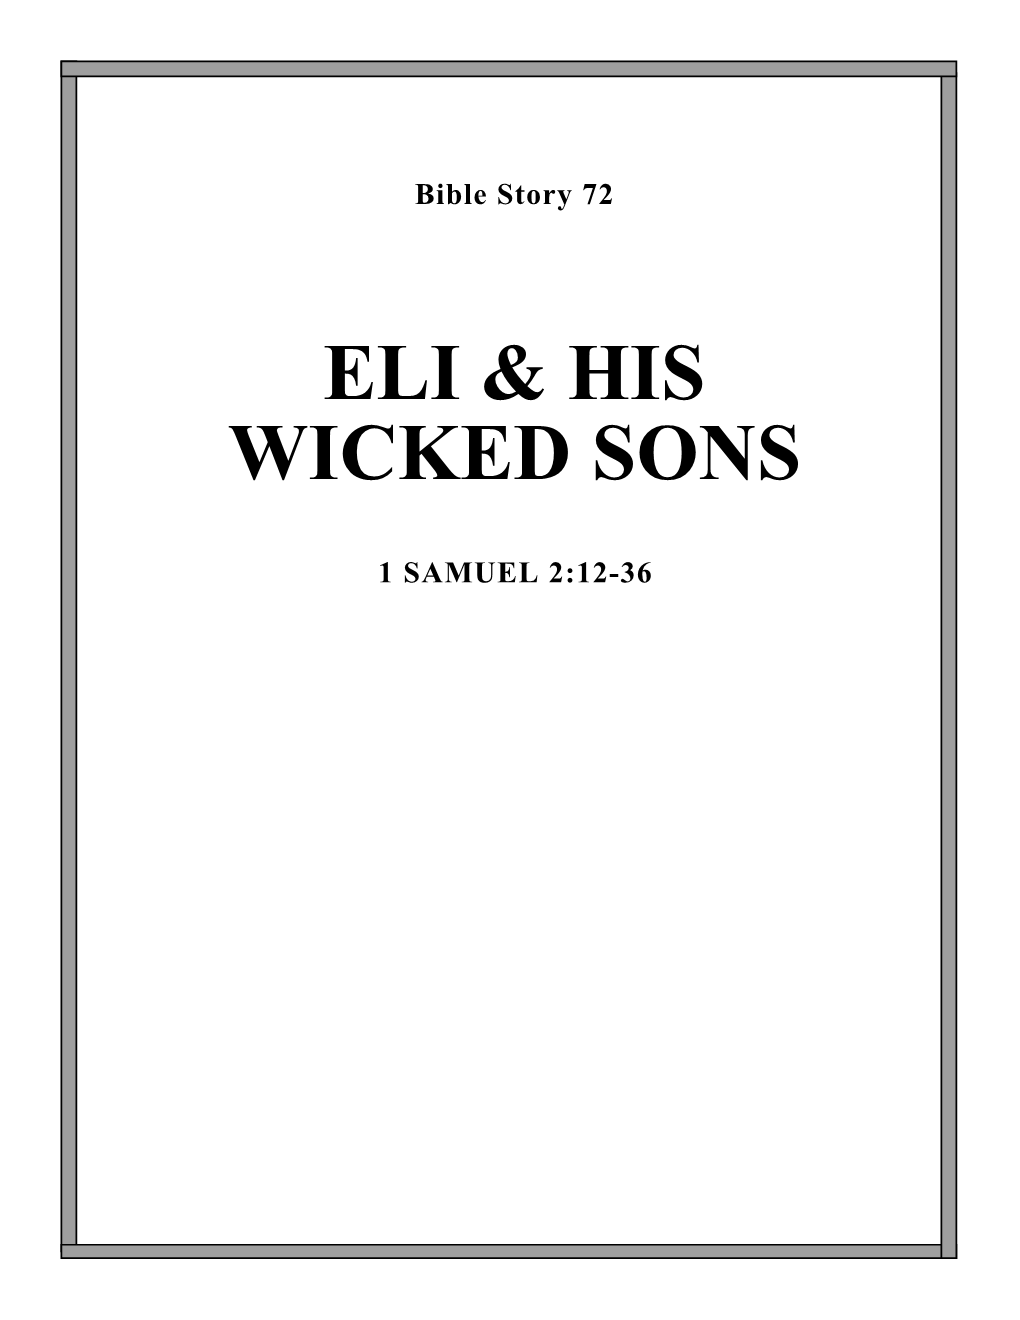 Eli & His Wicked Sons